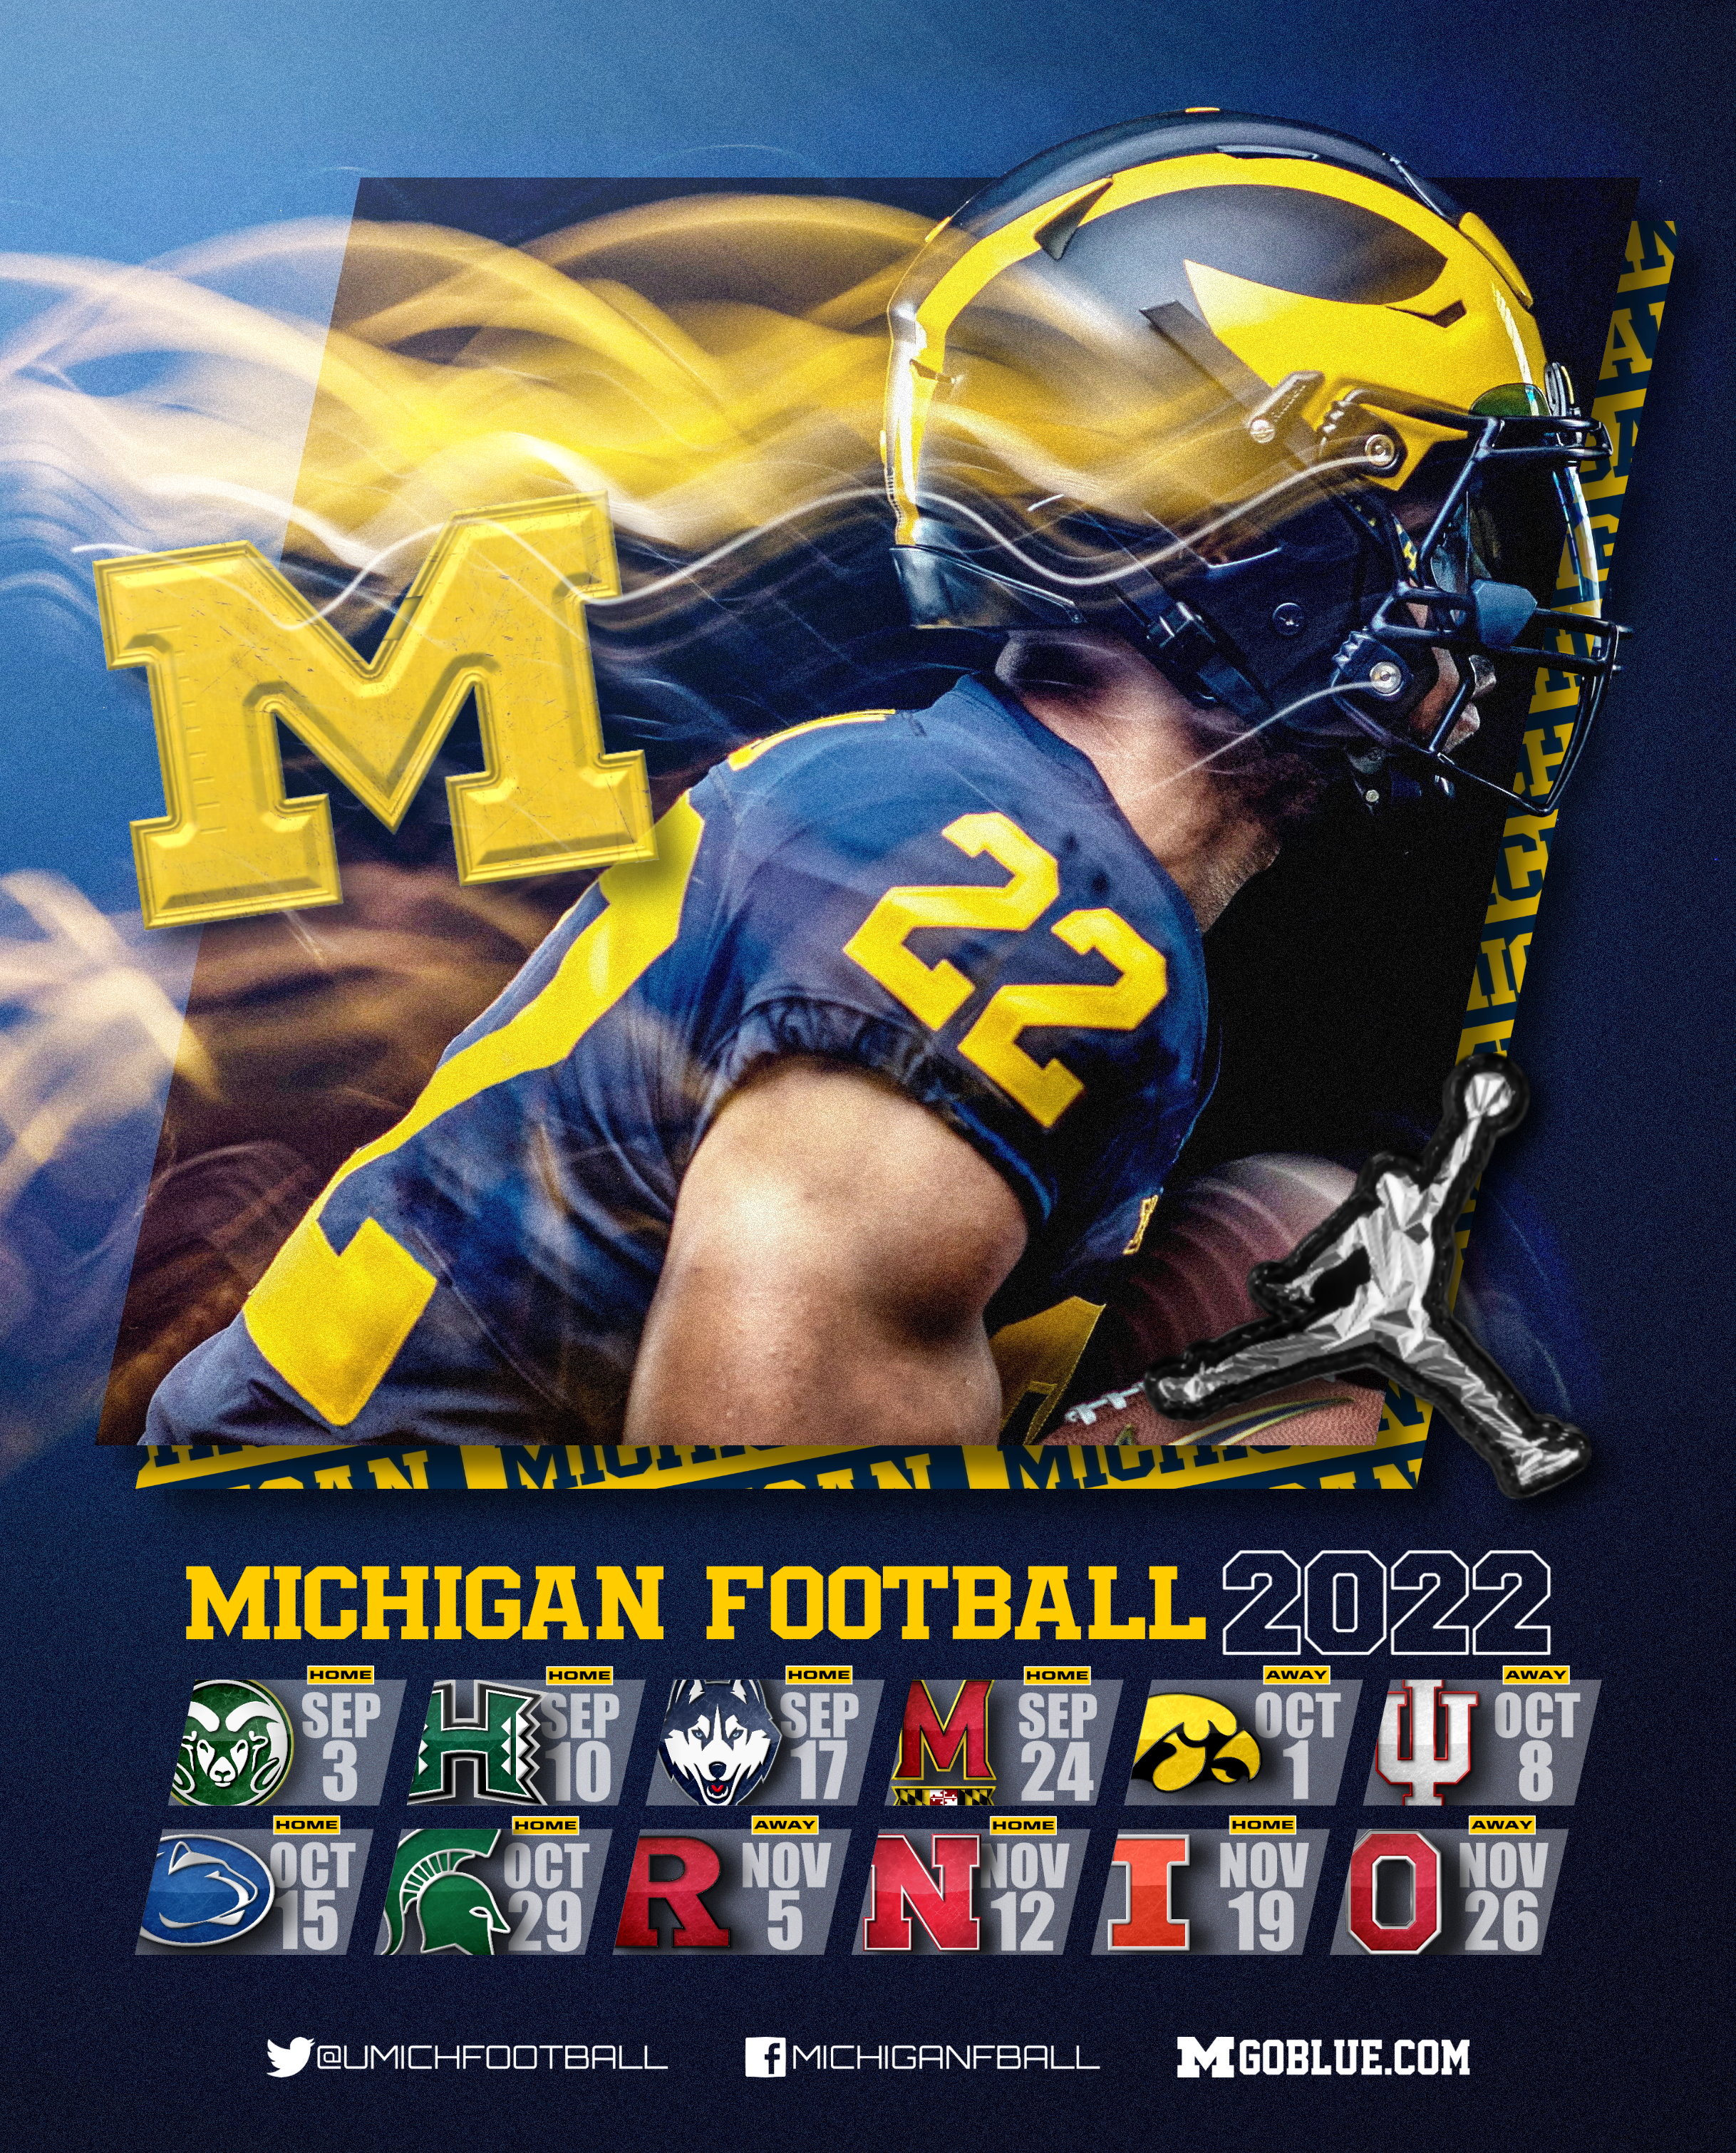 Michigan 2022 Football Schedule Michigan Football On Twitter: "𝐓𝐡𝐞 𝐌𝐢𝐜𝐡𝐢𝐠𝐚𝐧 𝐅𝐨𝐨𝐭𝐛𝐚𝐥𝐥  𝟐𝟎𝟐𝟐 𝐒𝐜𝐡𝐞𝐝𝐮𝐥𝐞! 🗞 Https://T.co/M6Z57Mi9Qh 🎟  Https://T.co/Zp7N31Szdy #Goblue Https://T.co/Bab5Dwgoqv" / Twitter